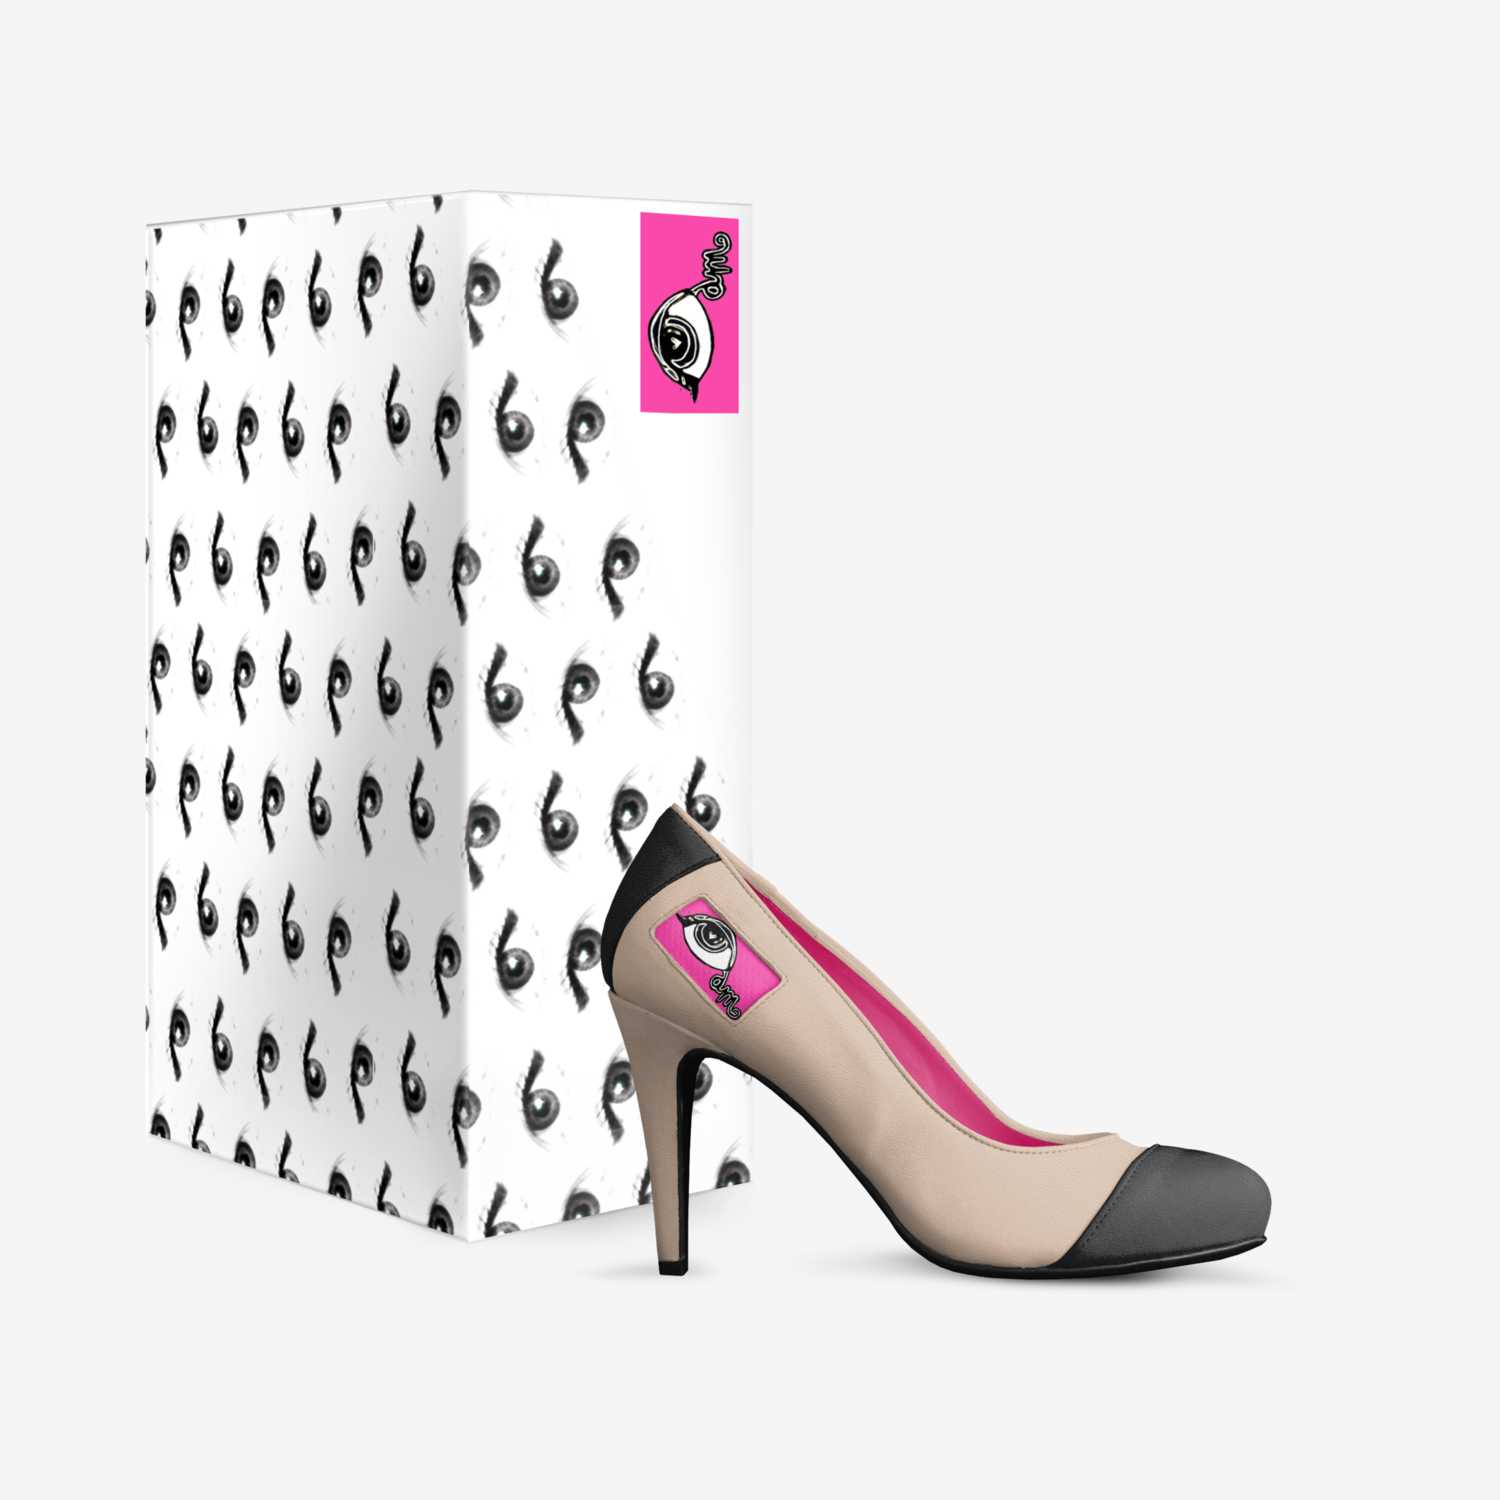 ia.m.ai custom made in Italy shoes by Ambrosia Sullivan | Box view